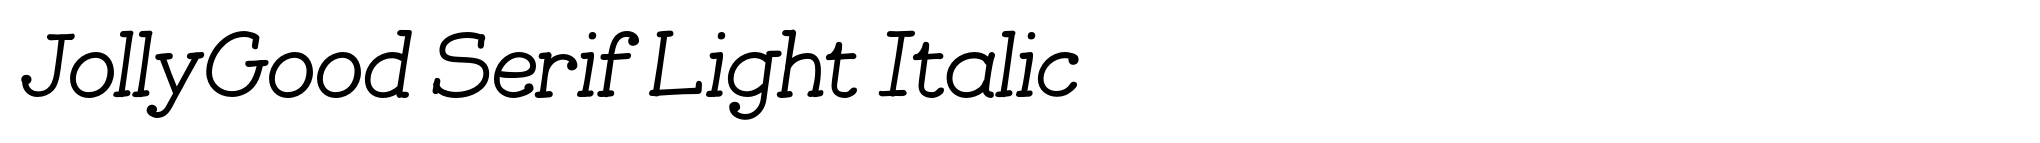 JollyGood Serif Light Italic image